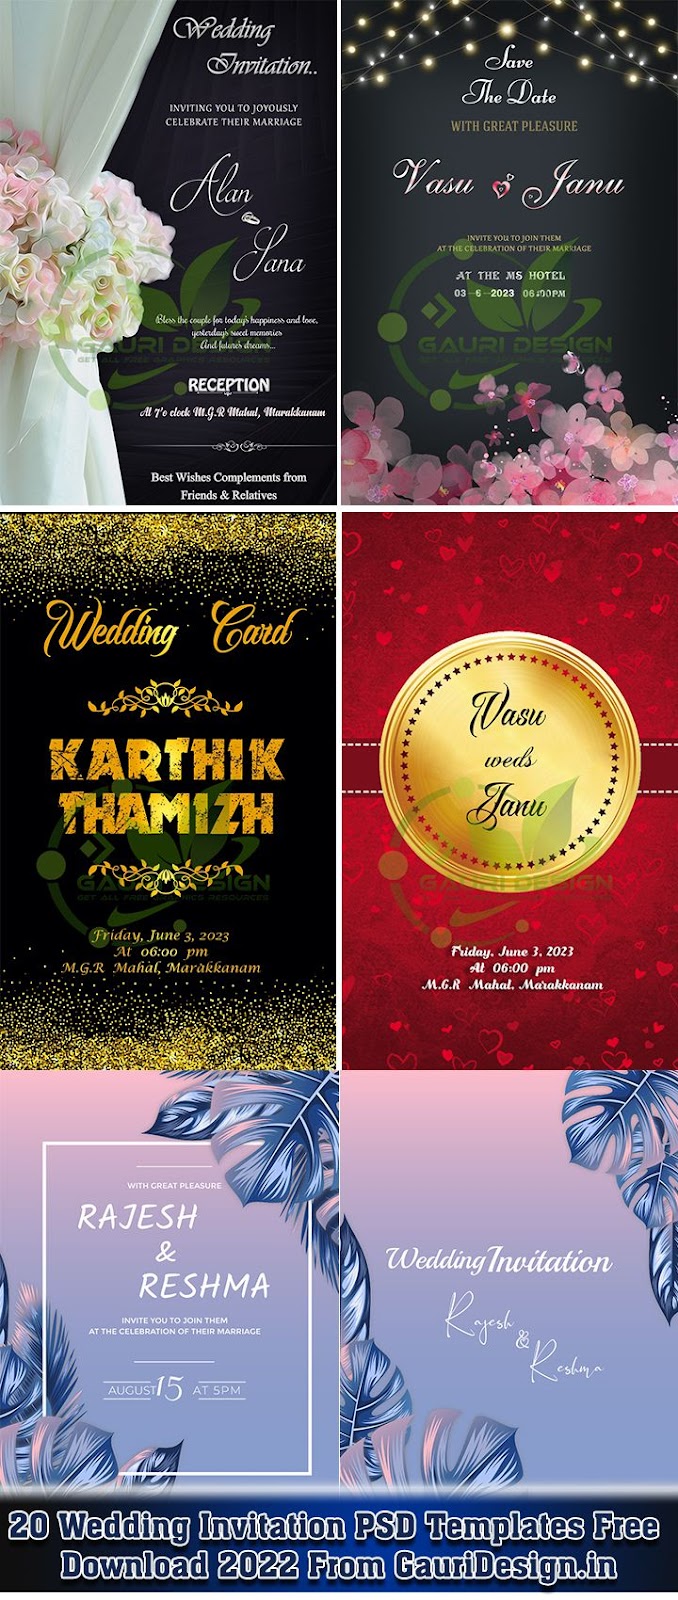 20-wedding-invitation-psd-templates-free-download-2022-gauri-design